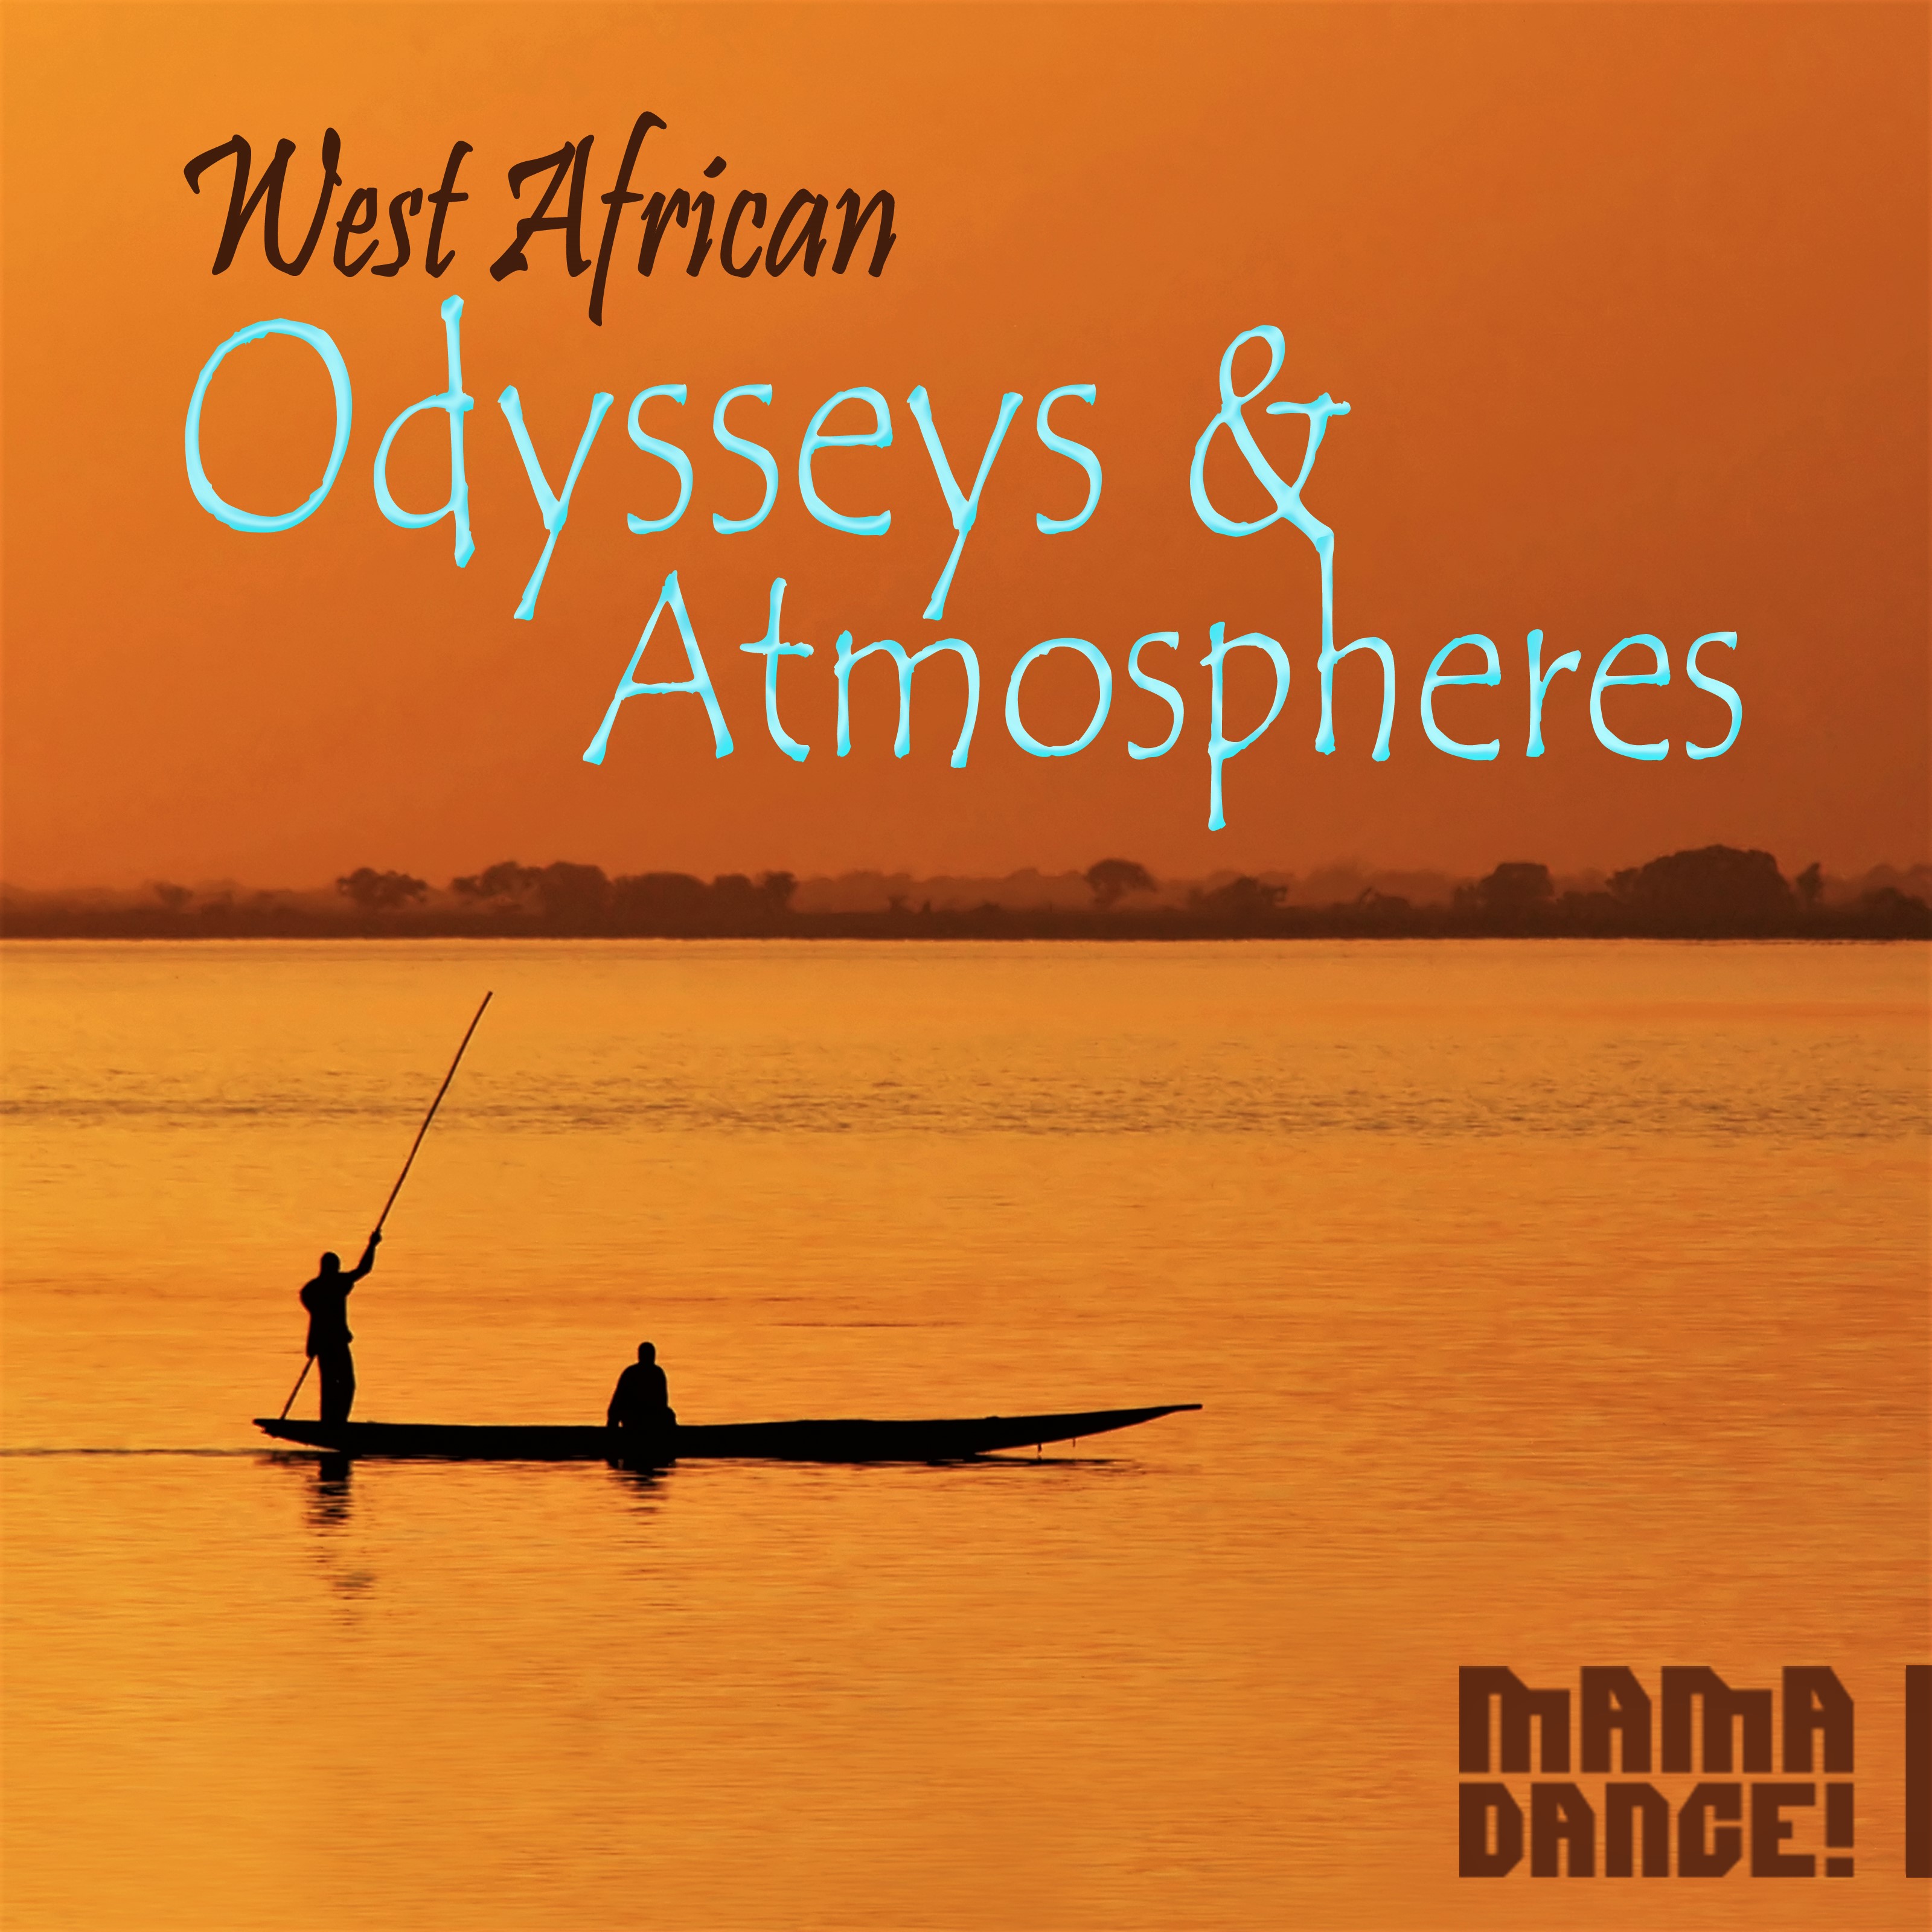 West African Odysseys & Atmospheres